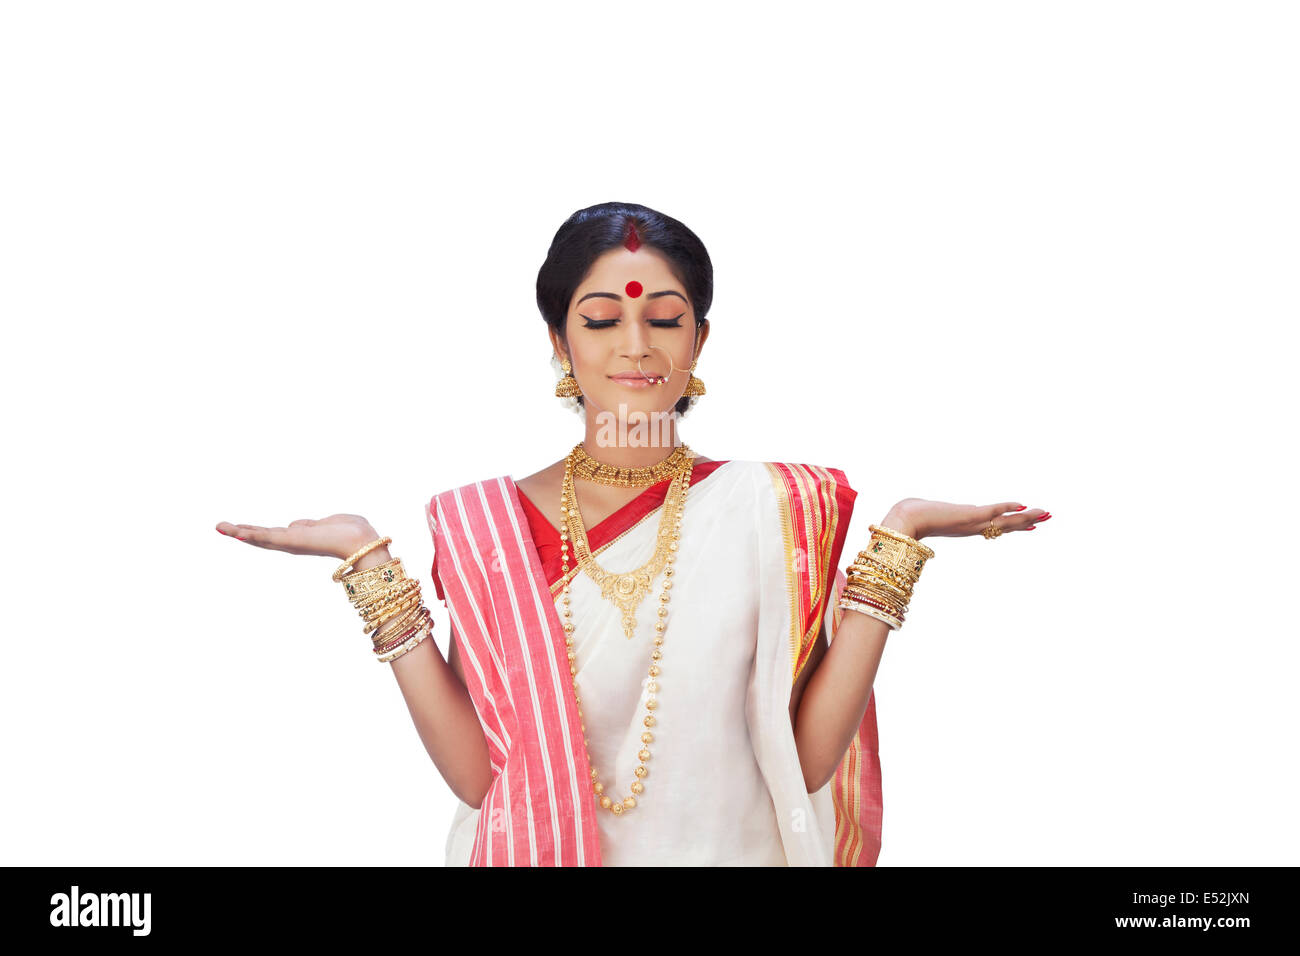 Bengali woman imagining Stock Photo